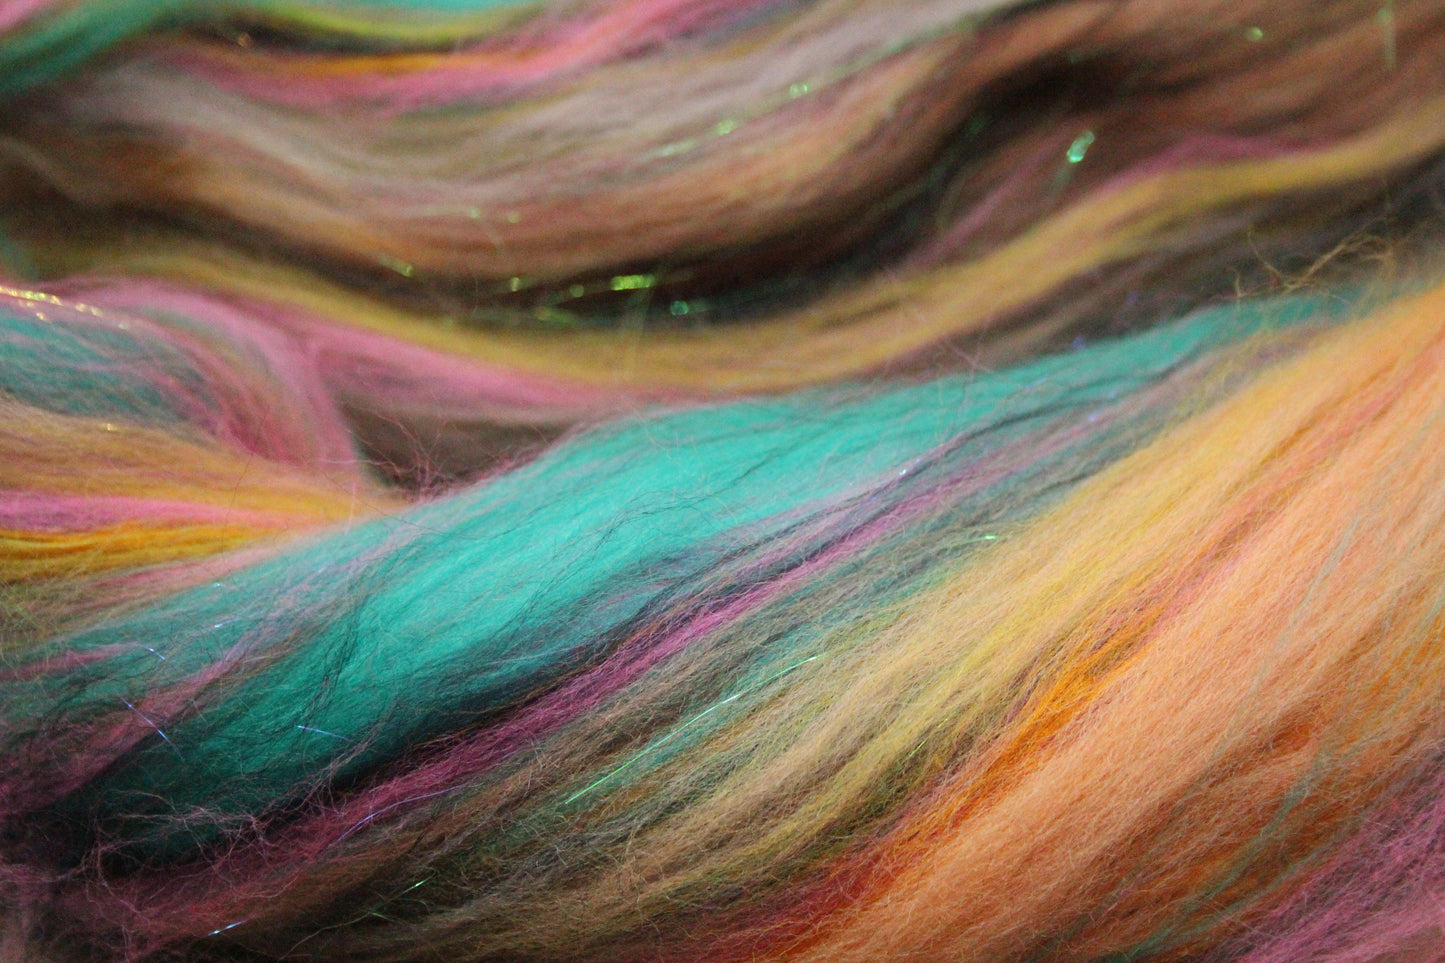 Merino Wool Blend - Yellow Green Pink Orange - 32 grams / 1.1 oz  - Fibre for felting, weaving or spinning